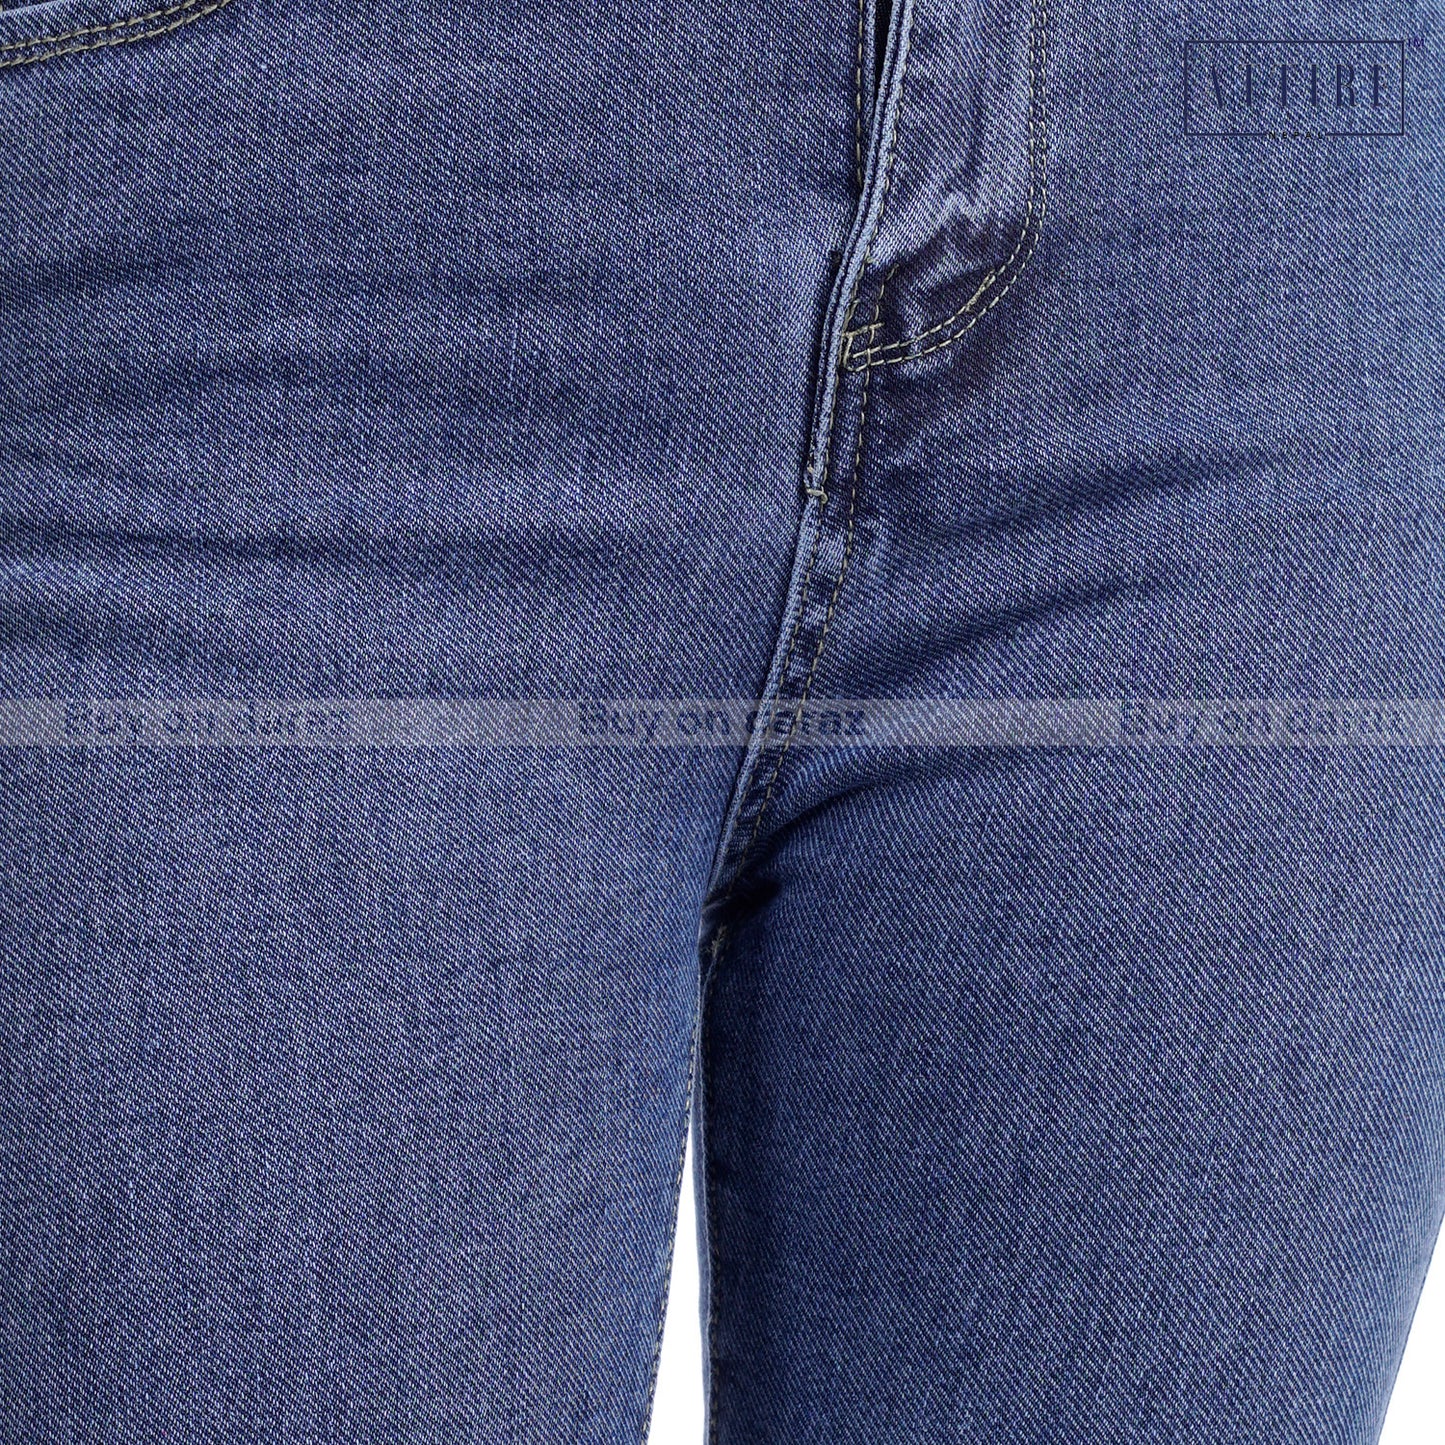 Blue Skinny Jeans Pant